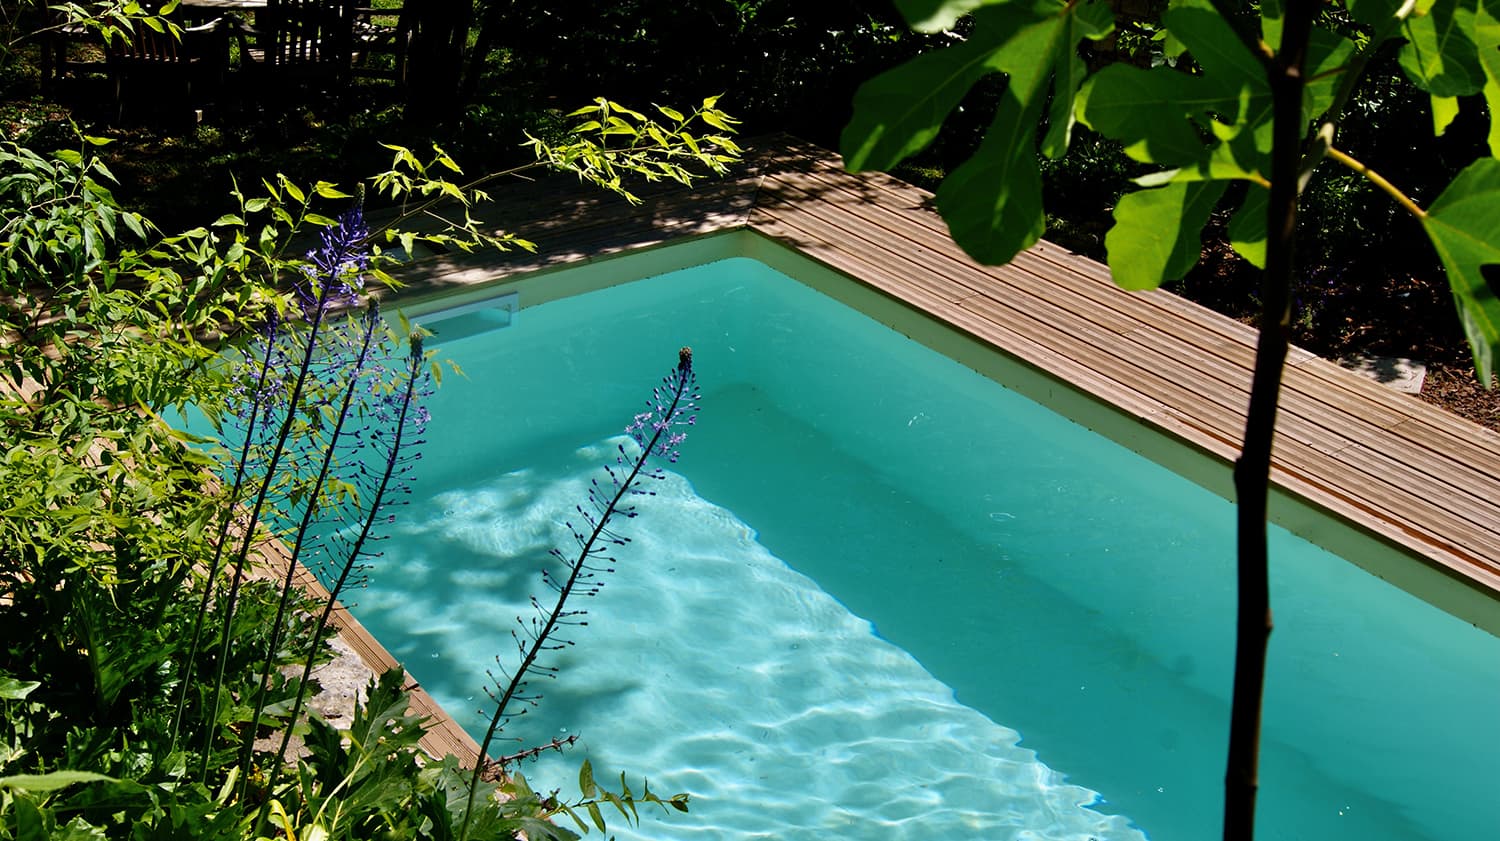 Private pool